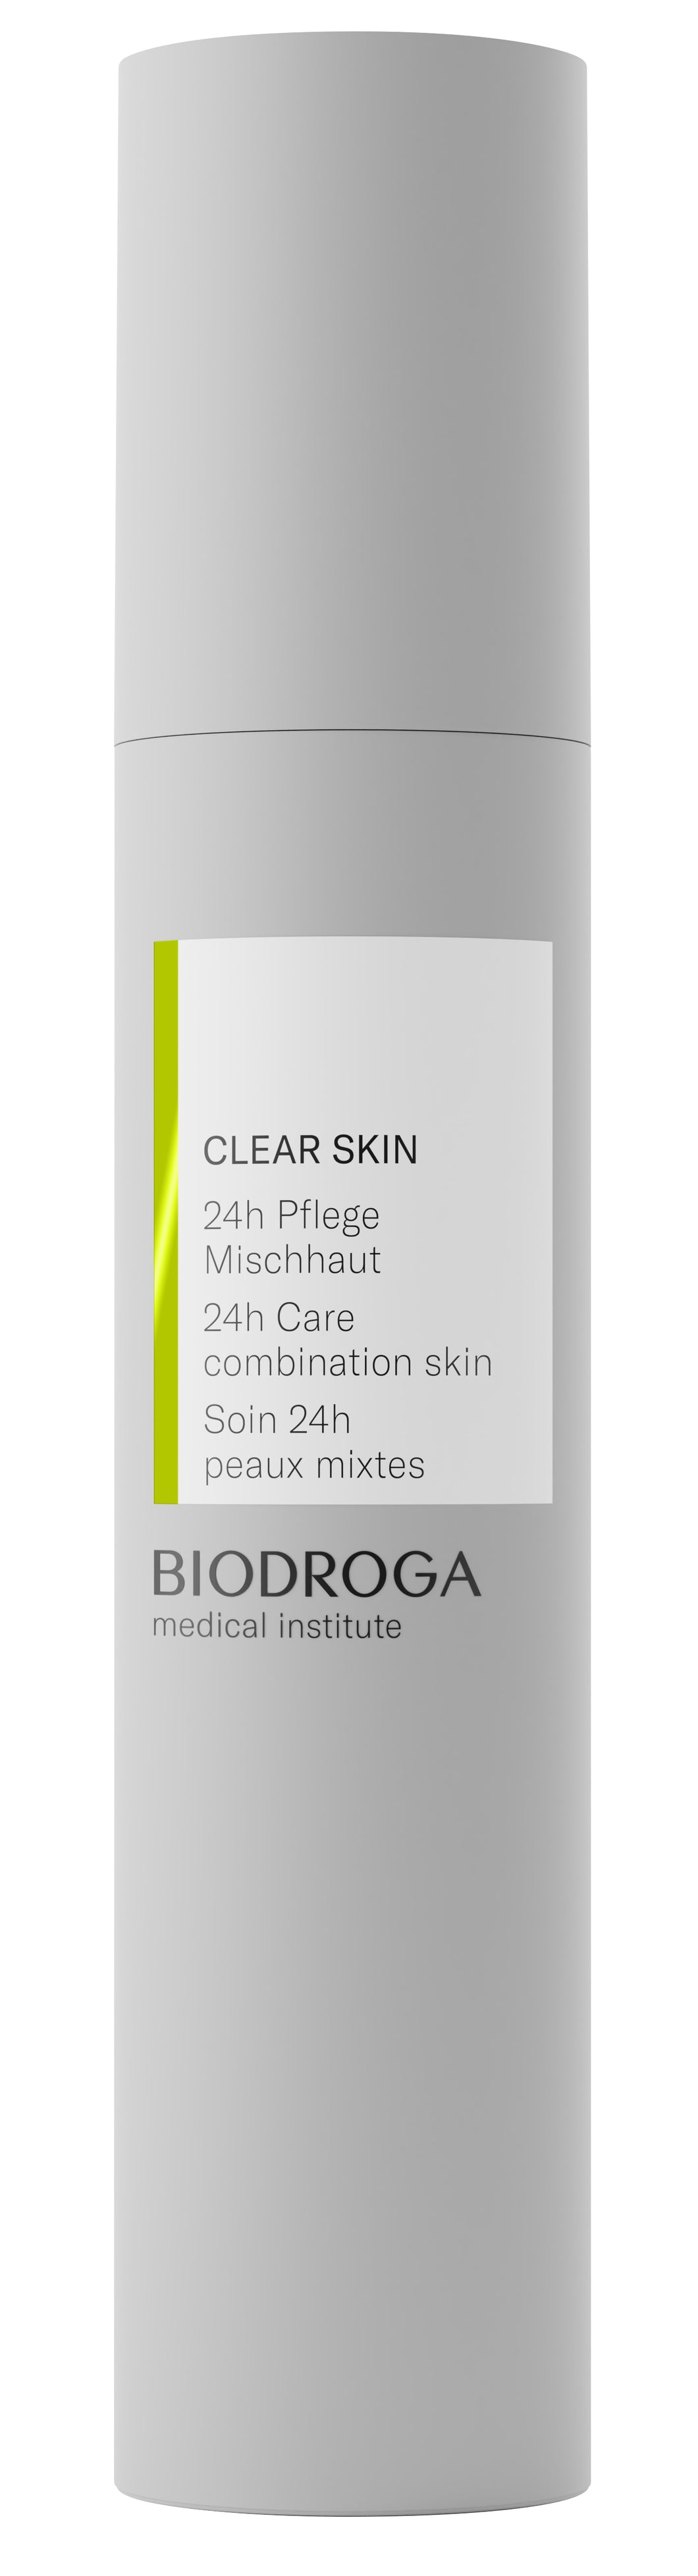 Biodroga Clear Skin 24h Pflege Mischhaut